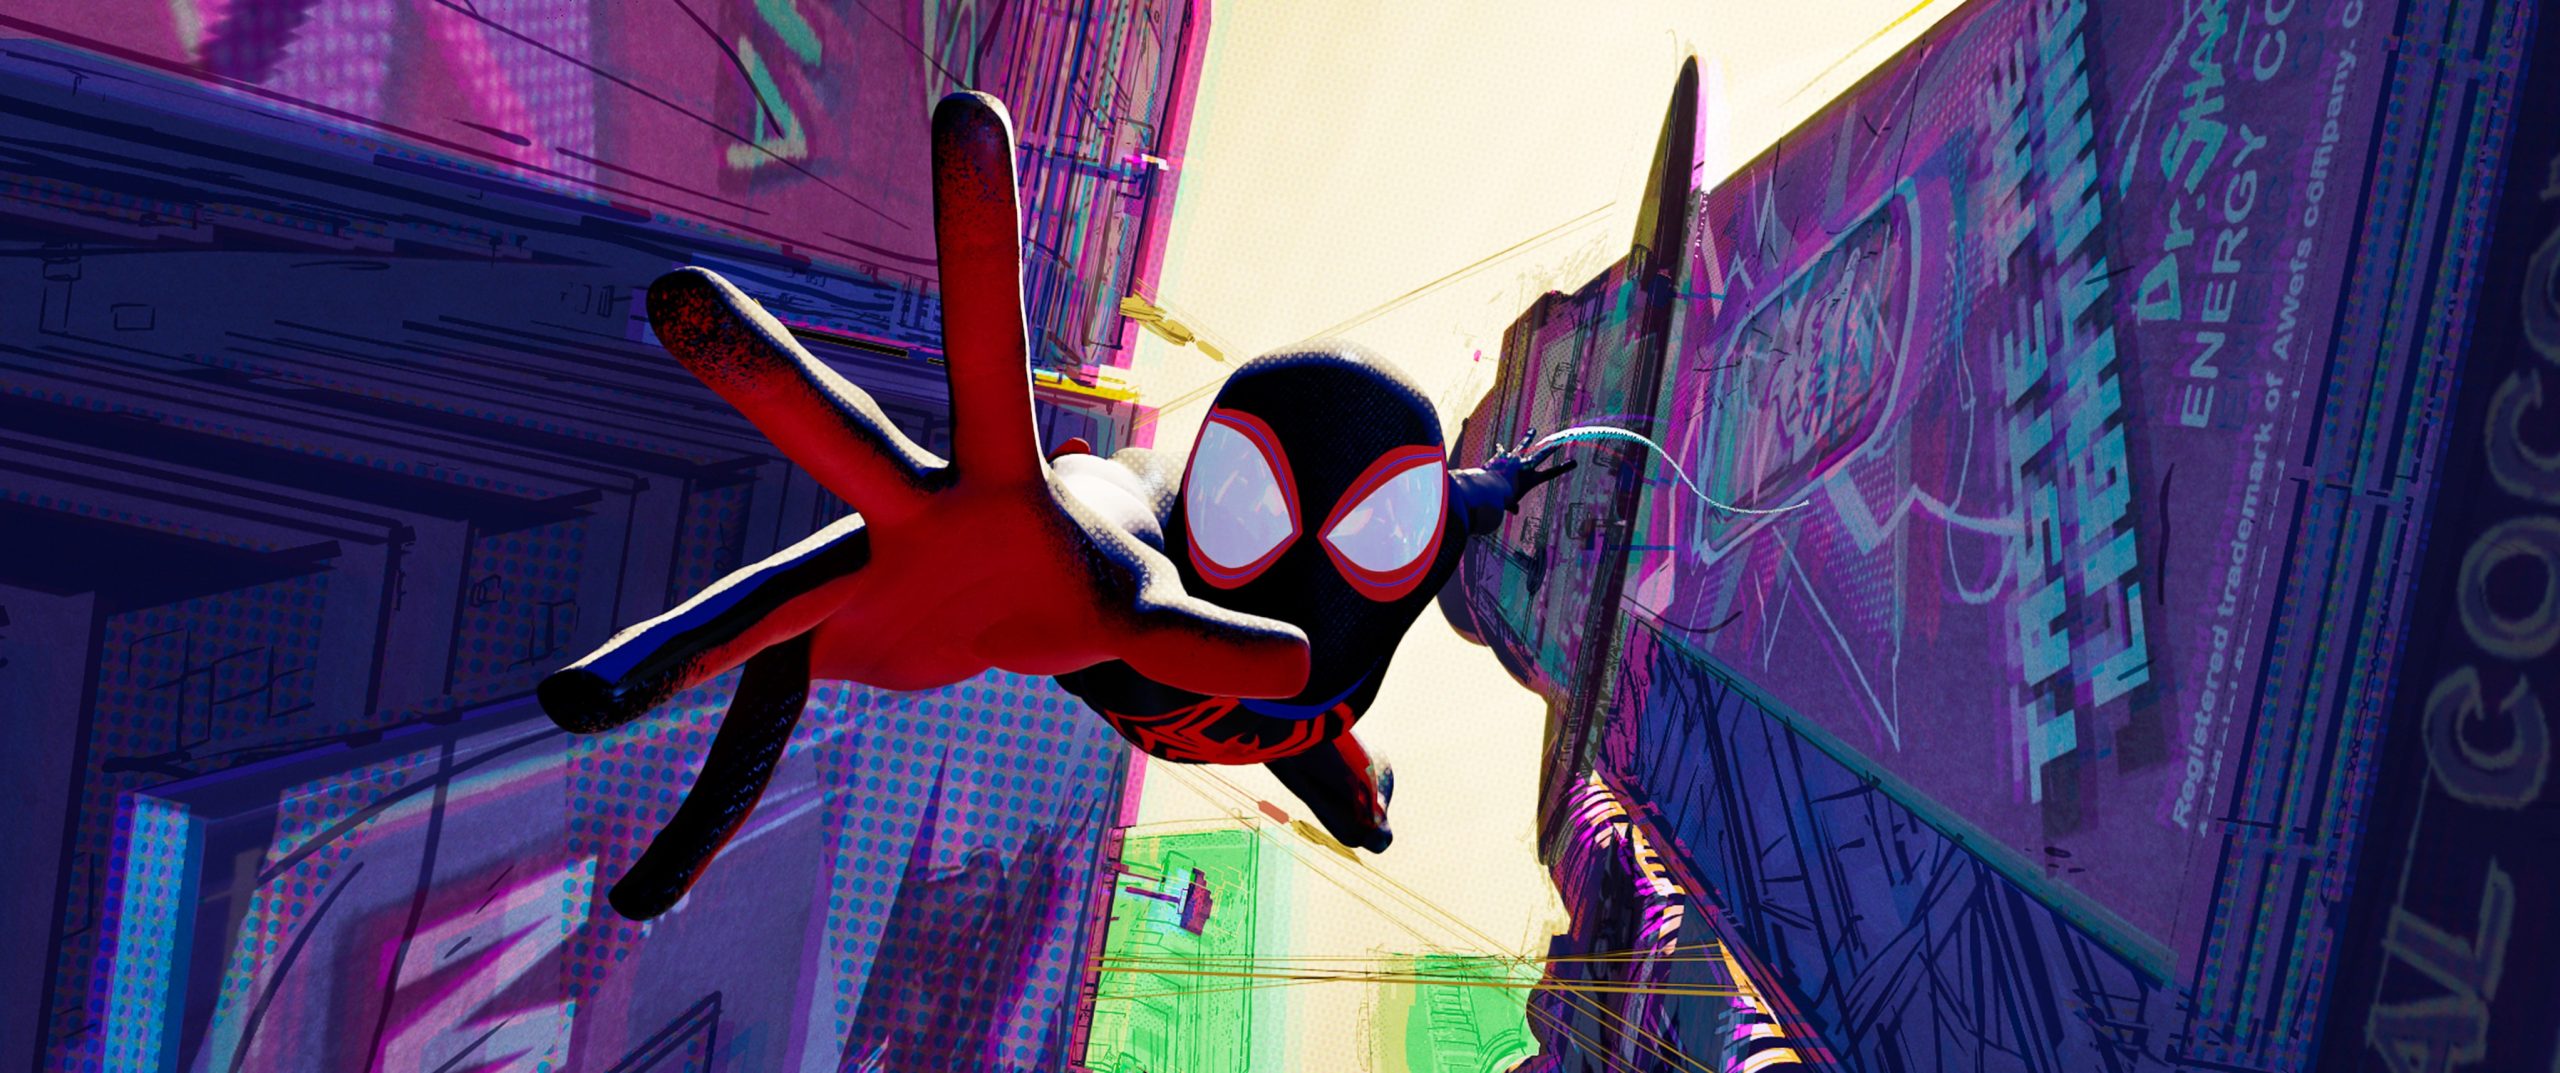 Metro Boomin Presents Spider-Man: Across The Spider-Verse